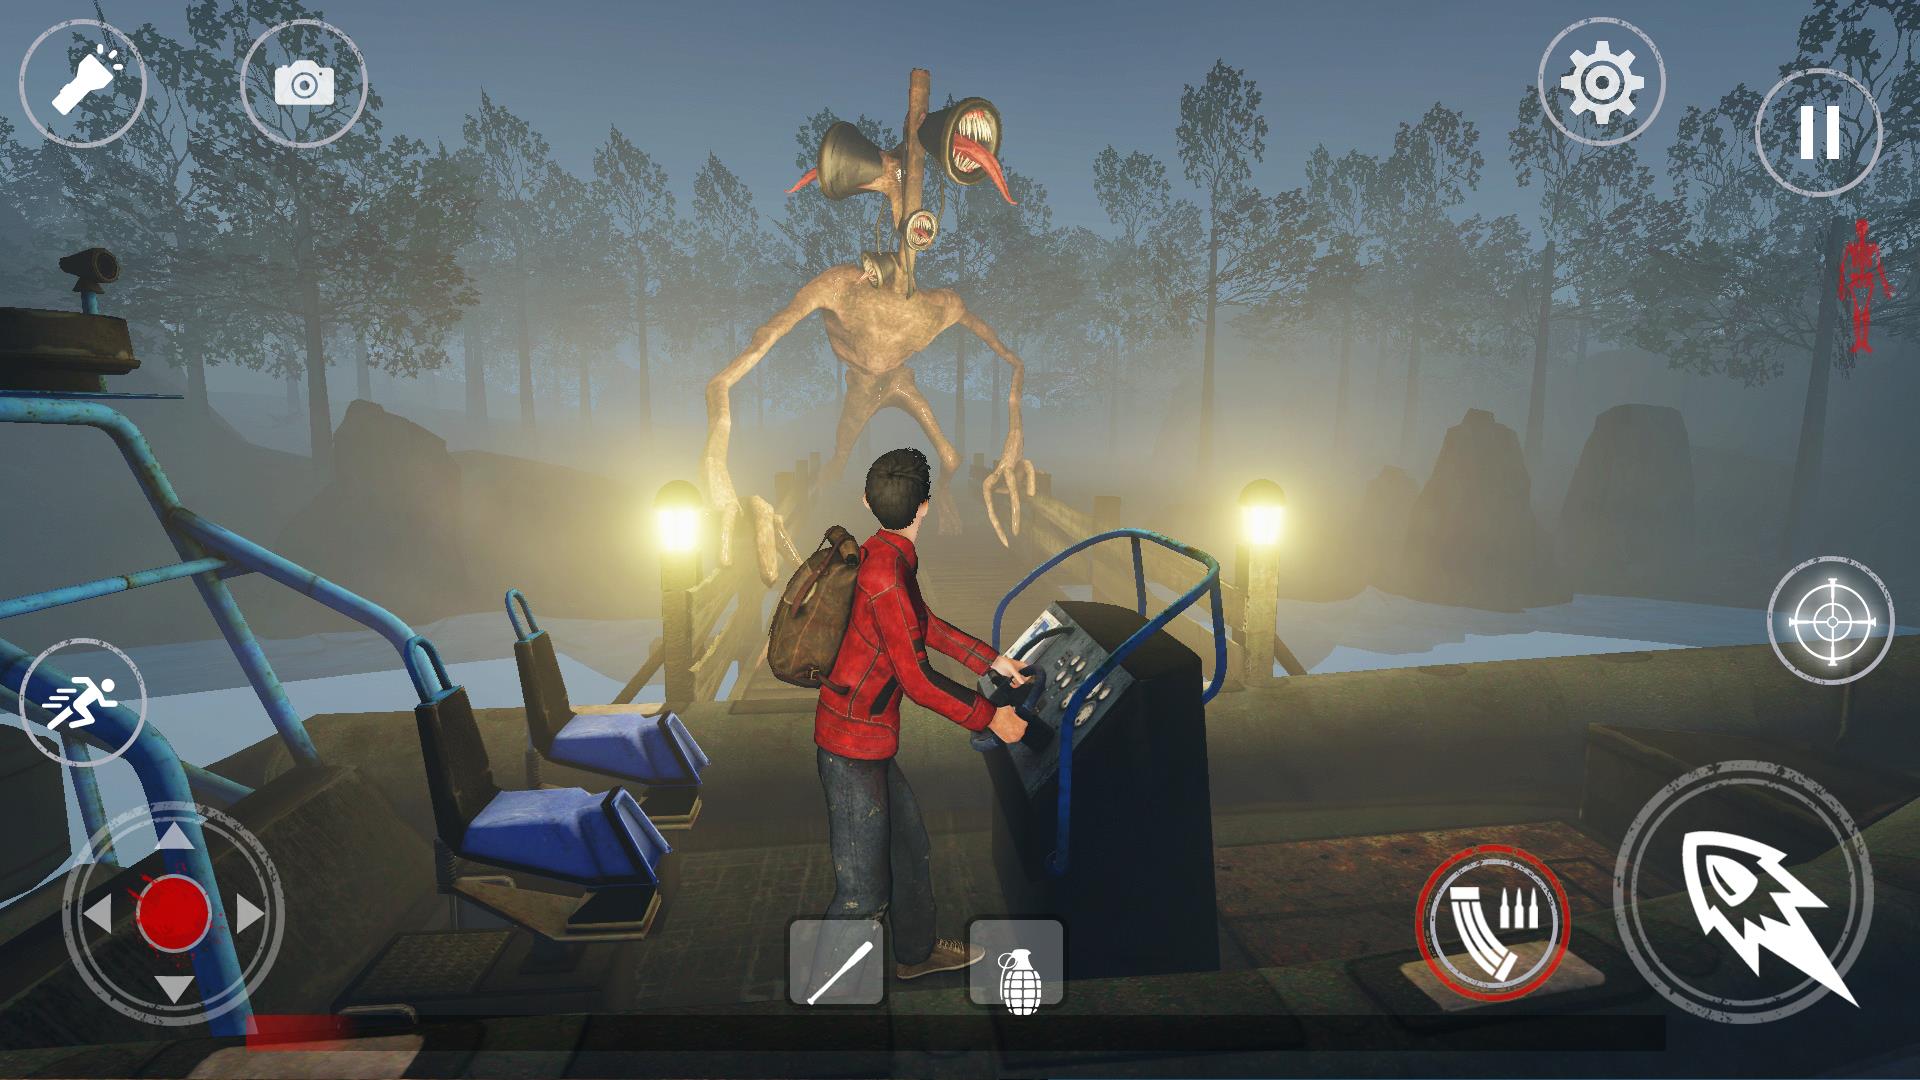 Siren Scary Head - Horror Game Screenshot 5